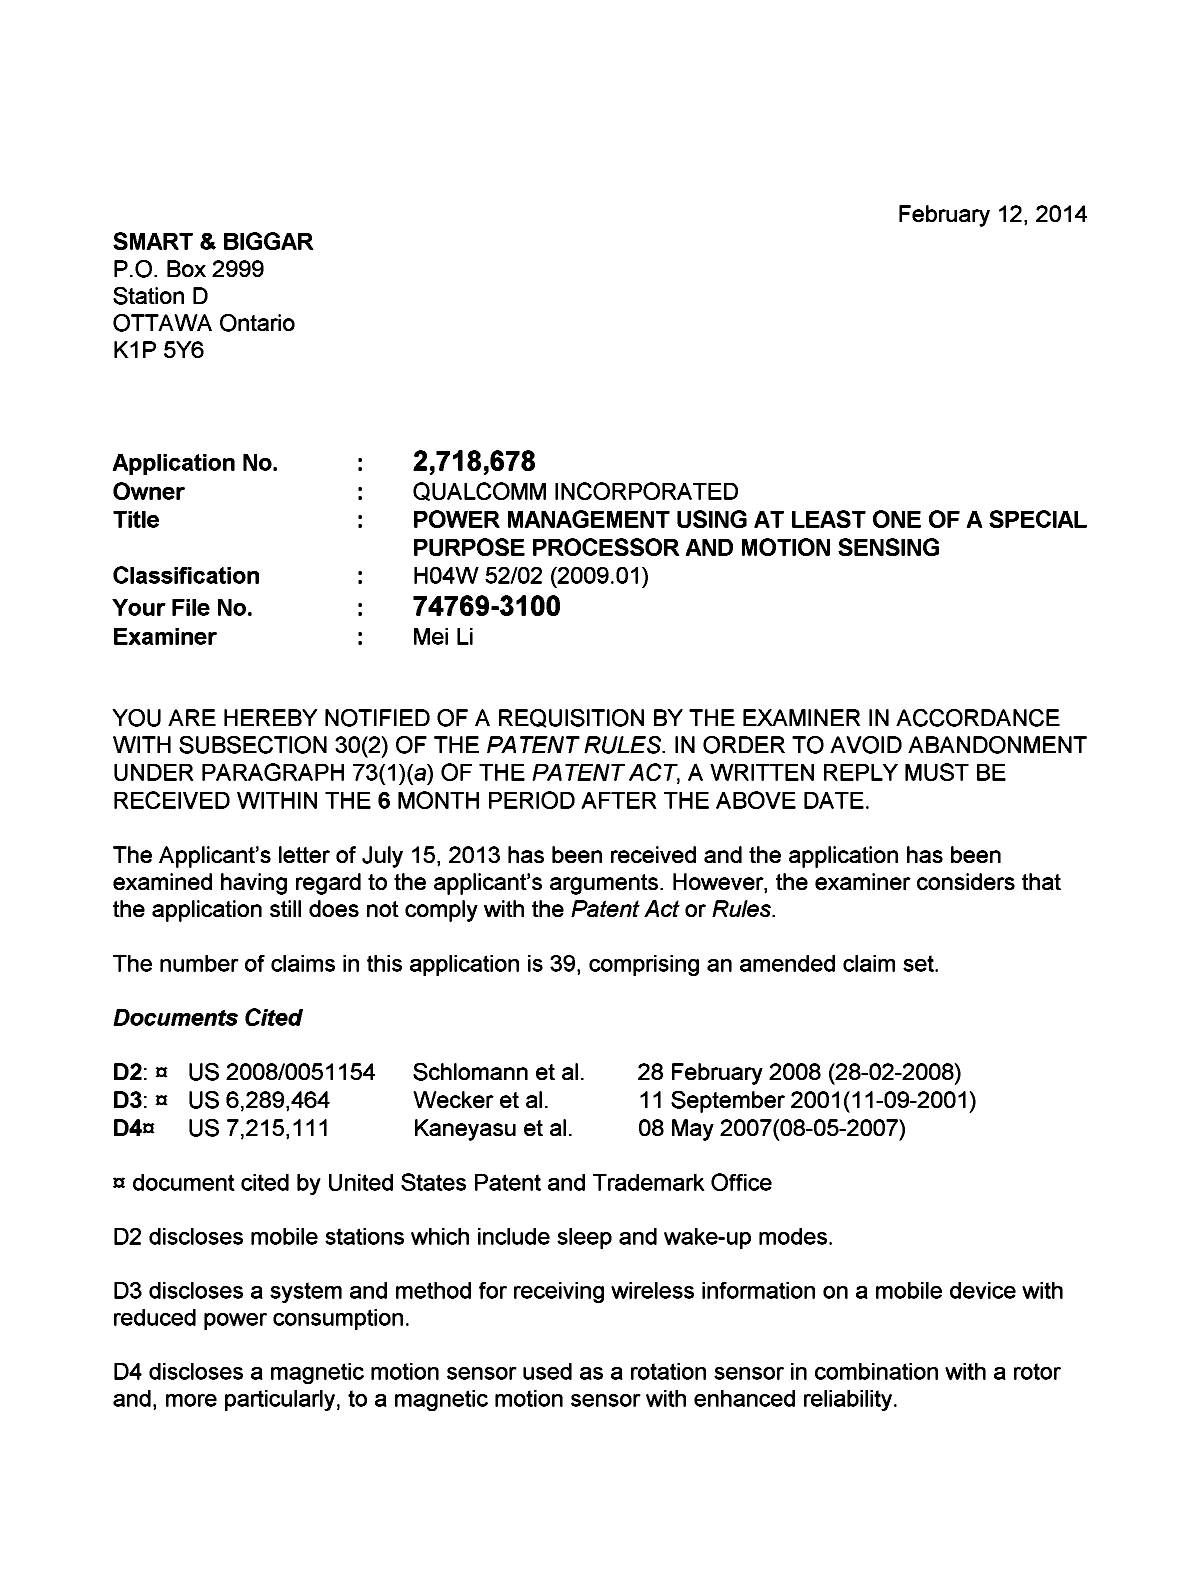 Canadian Patent Document 2718678. Prosecution-Amendment 20131212. Image 1 of 5